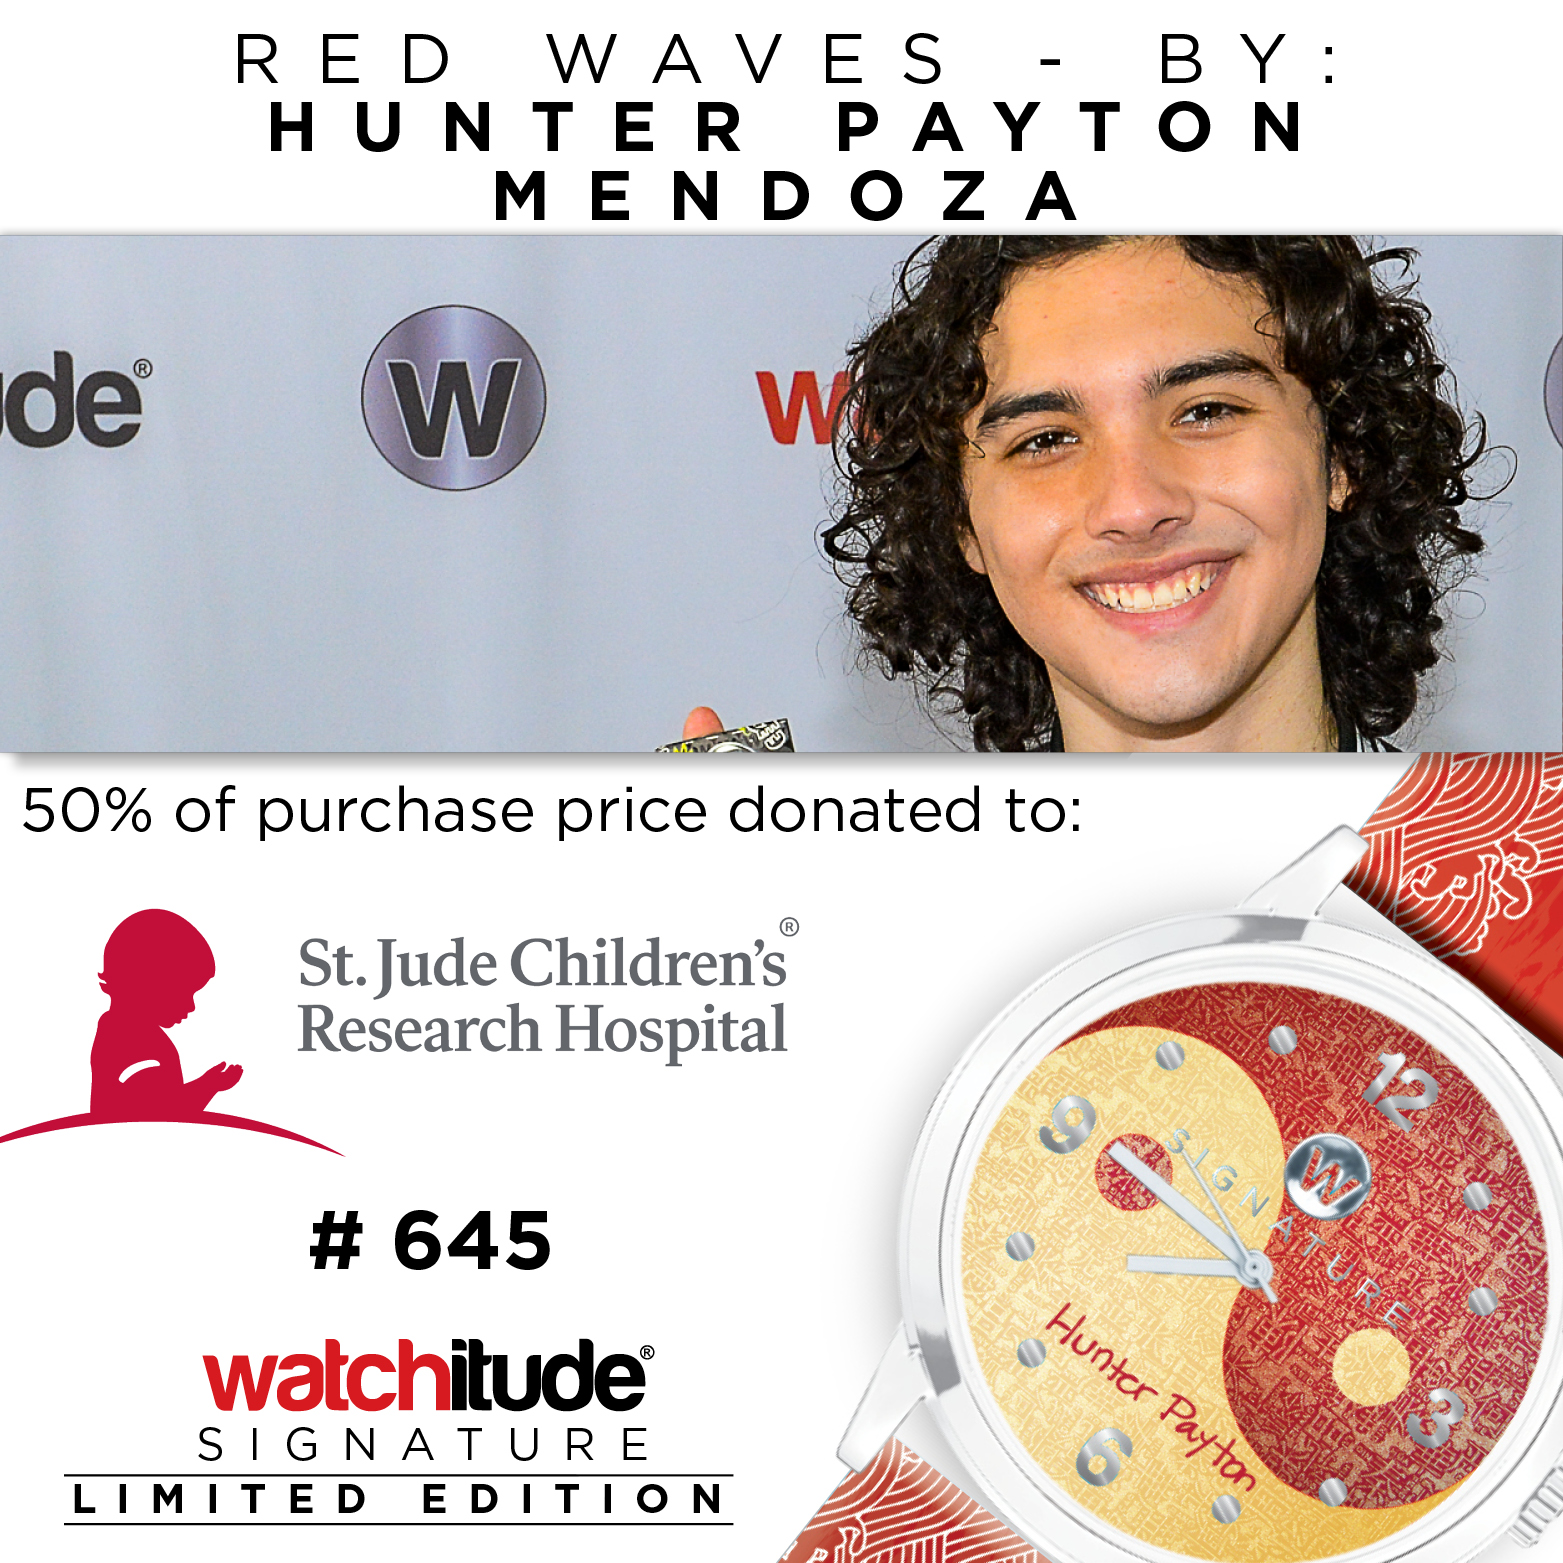 Red Waves - Hunter Payton Mendoza Signature watch image number 0